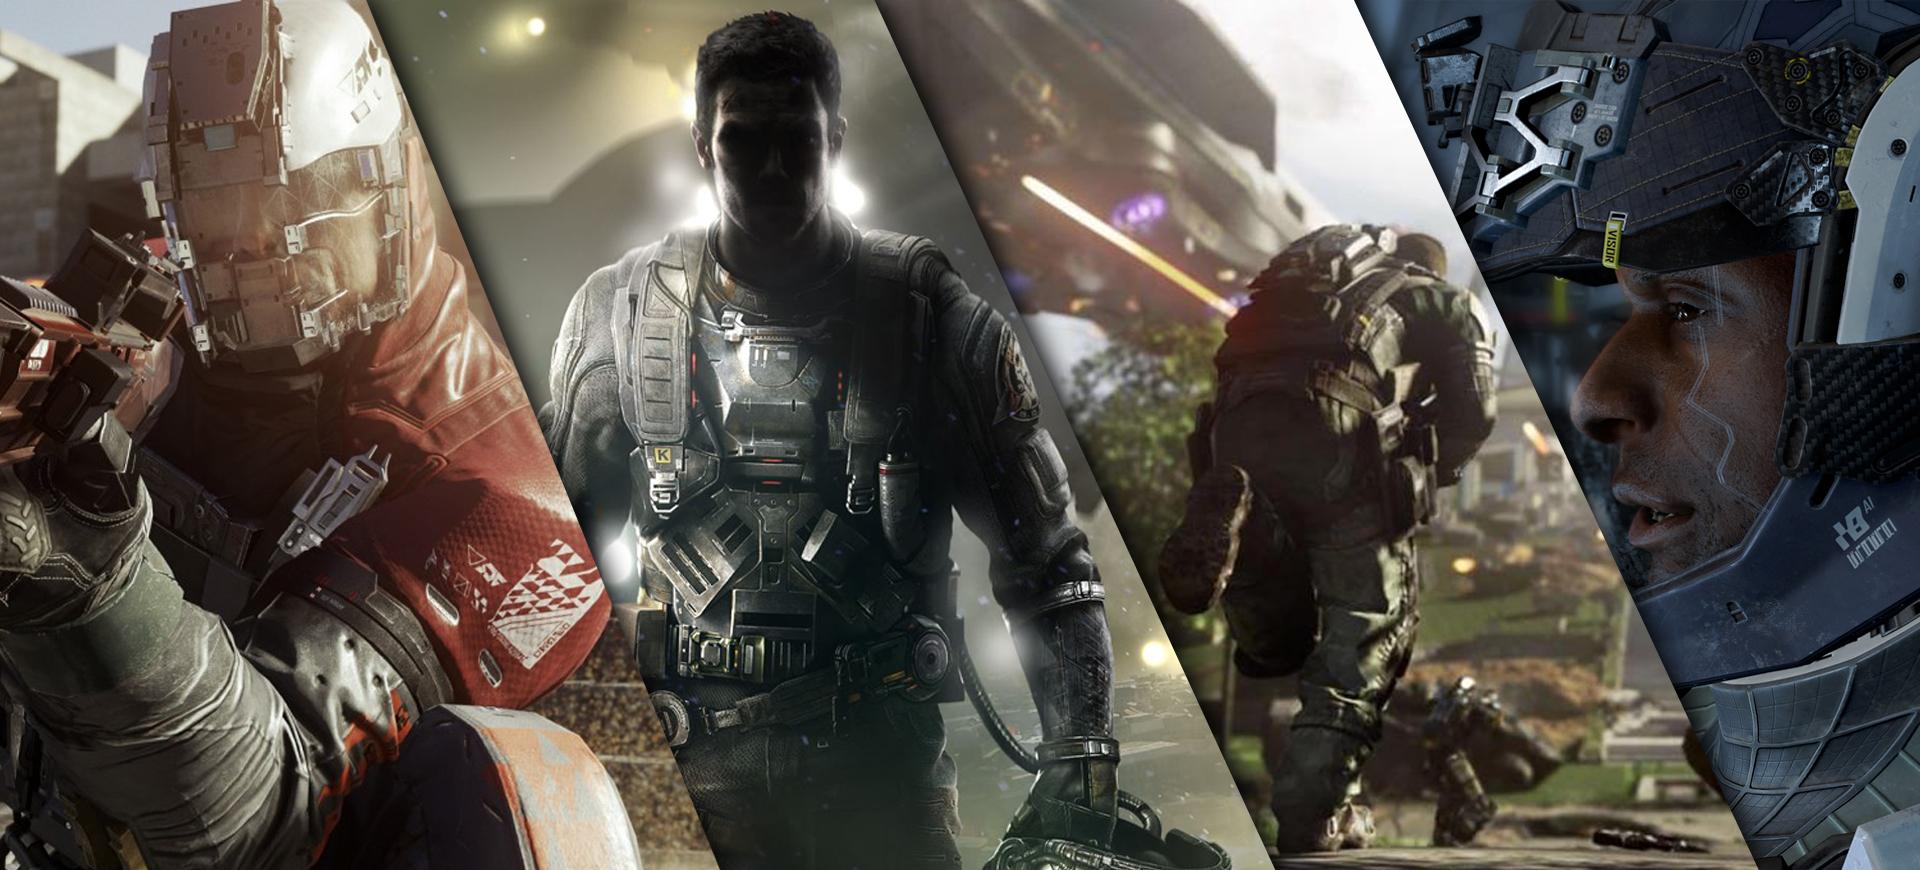 10 điều cần biết xung quanh "Call of Duty: Infinite Warfare" - Giới Thiệu Game